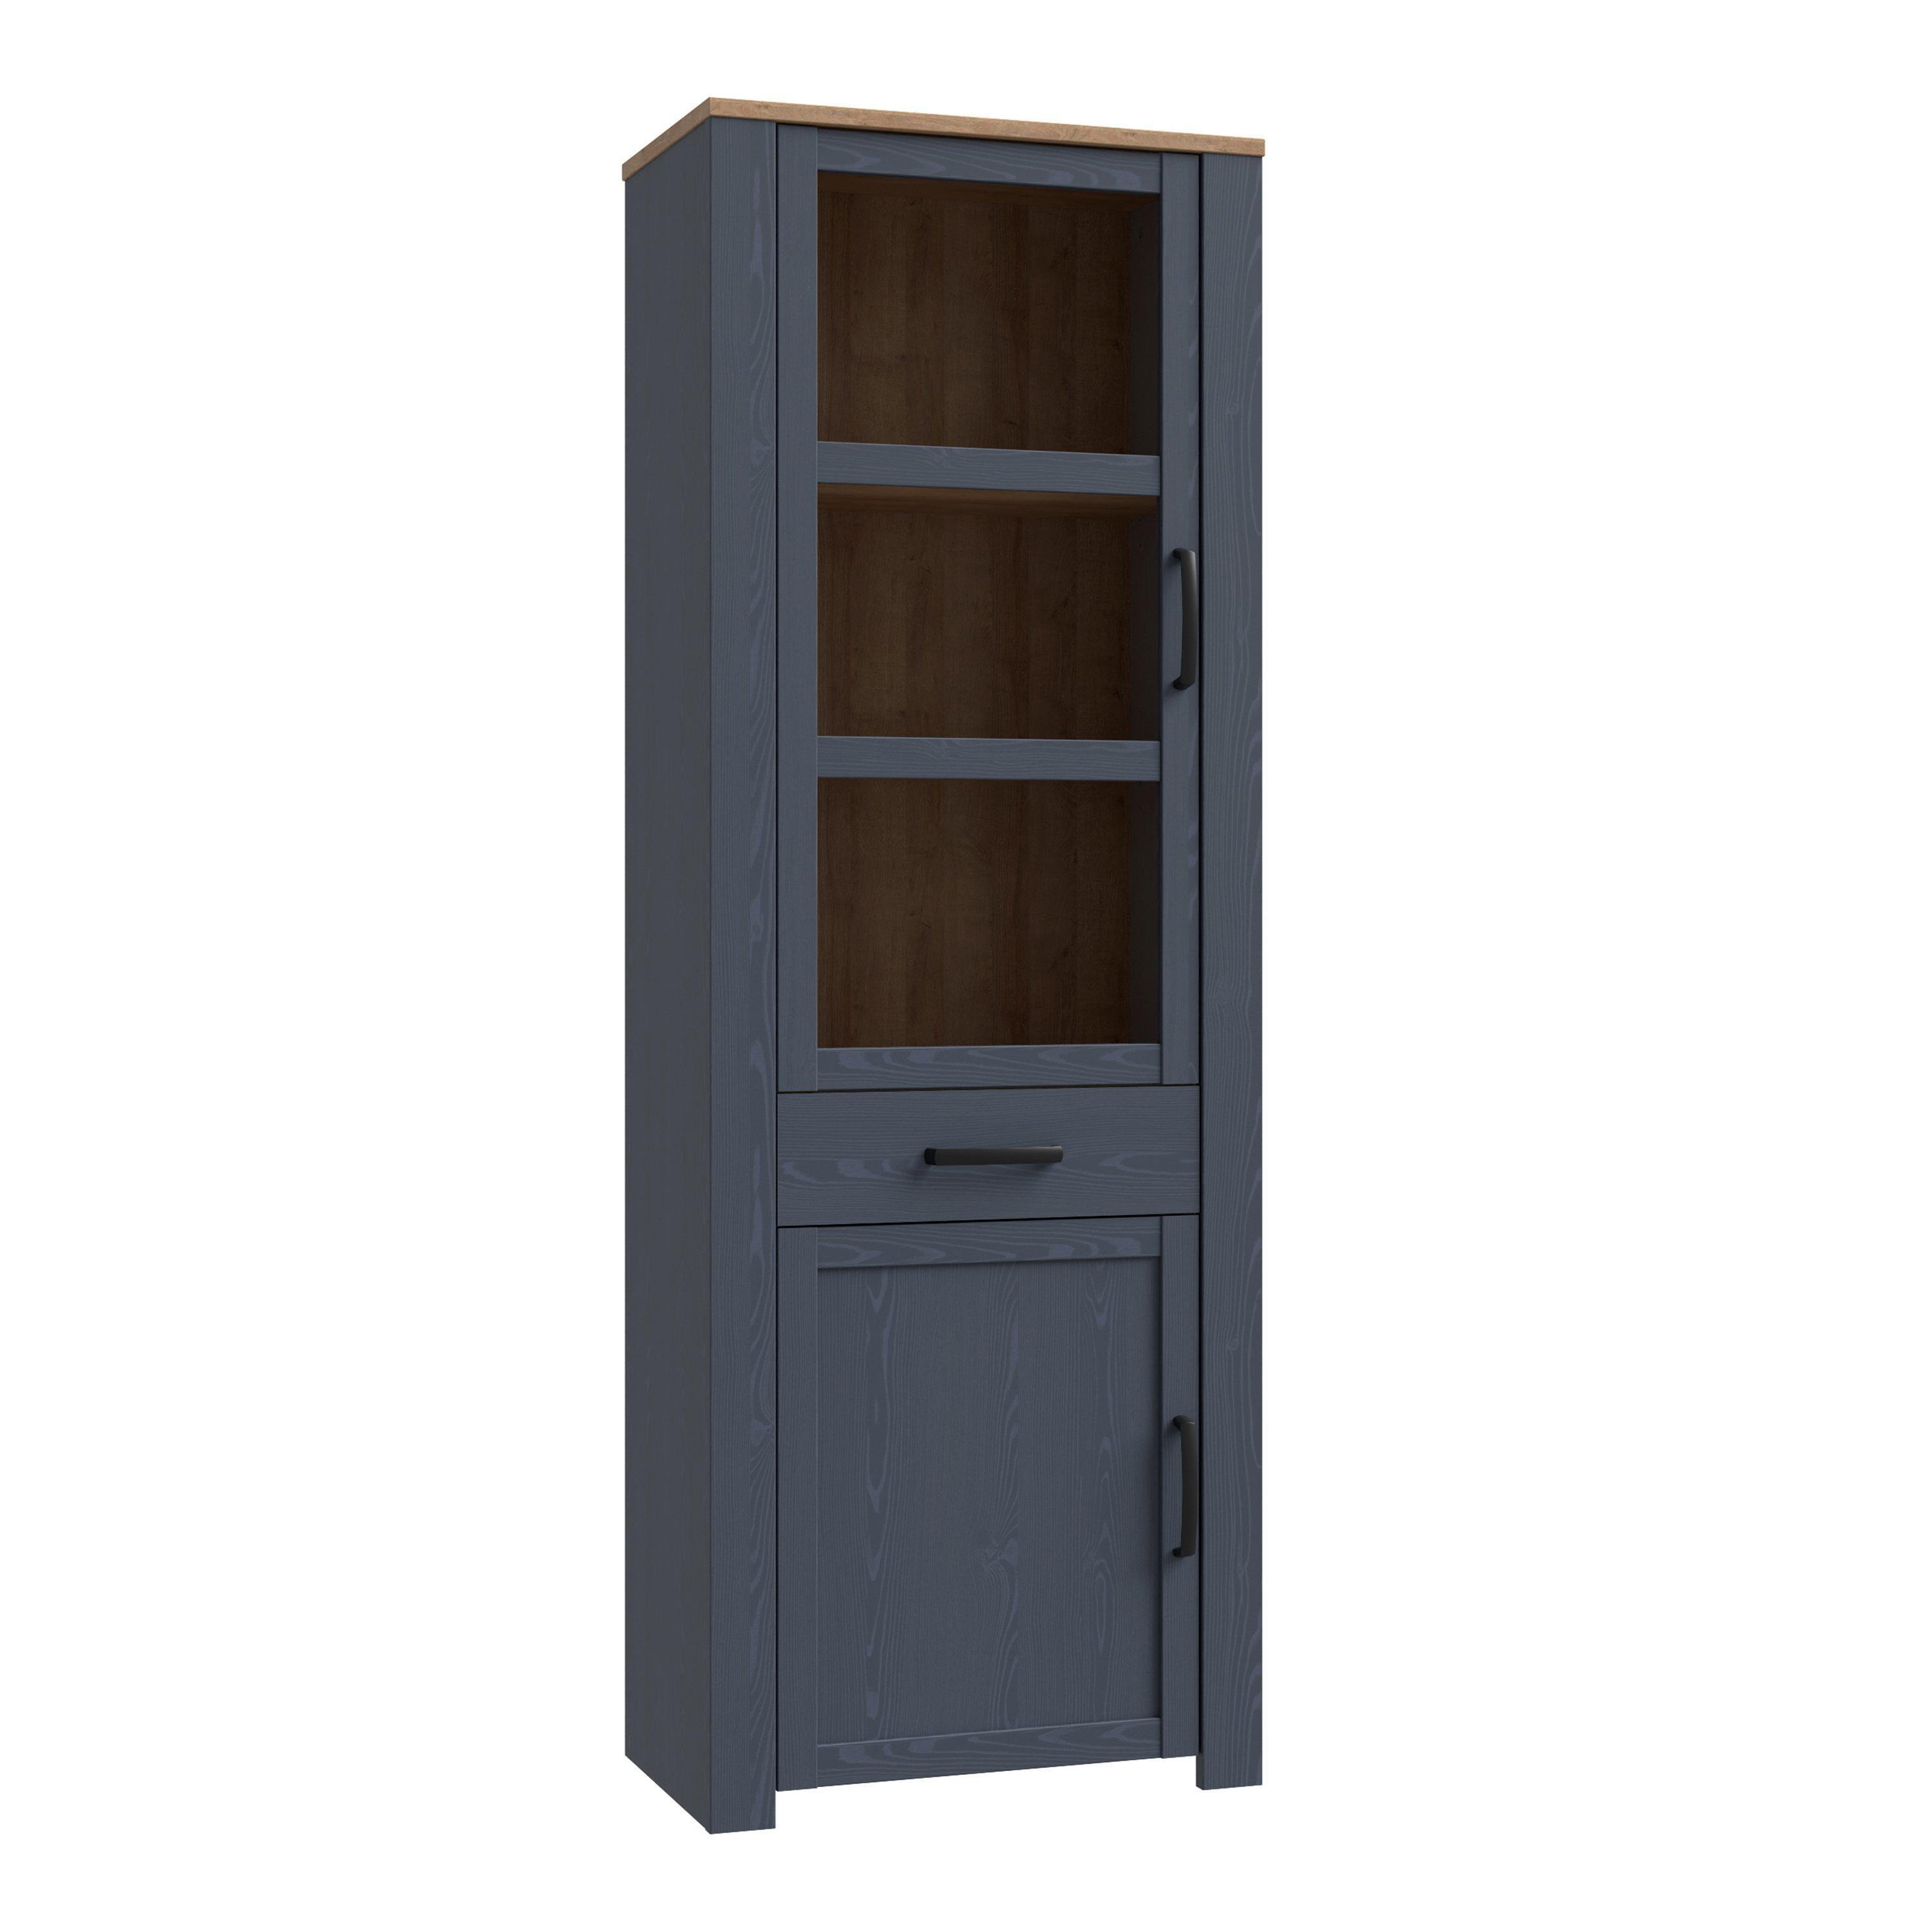 Bohol Narrow Display Cabinet - image 1